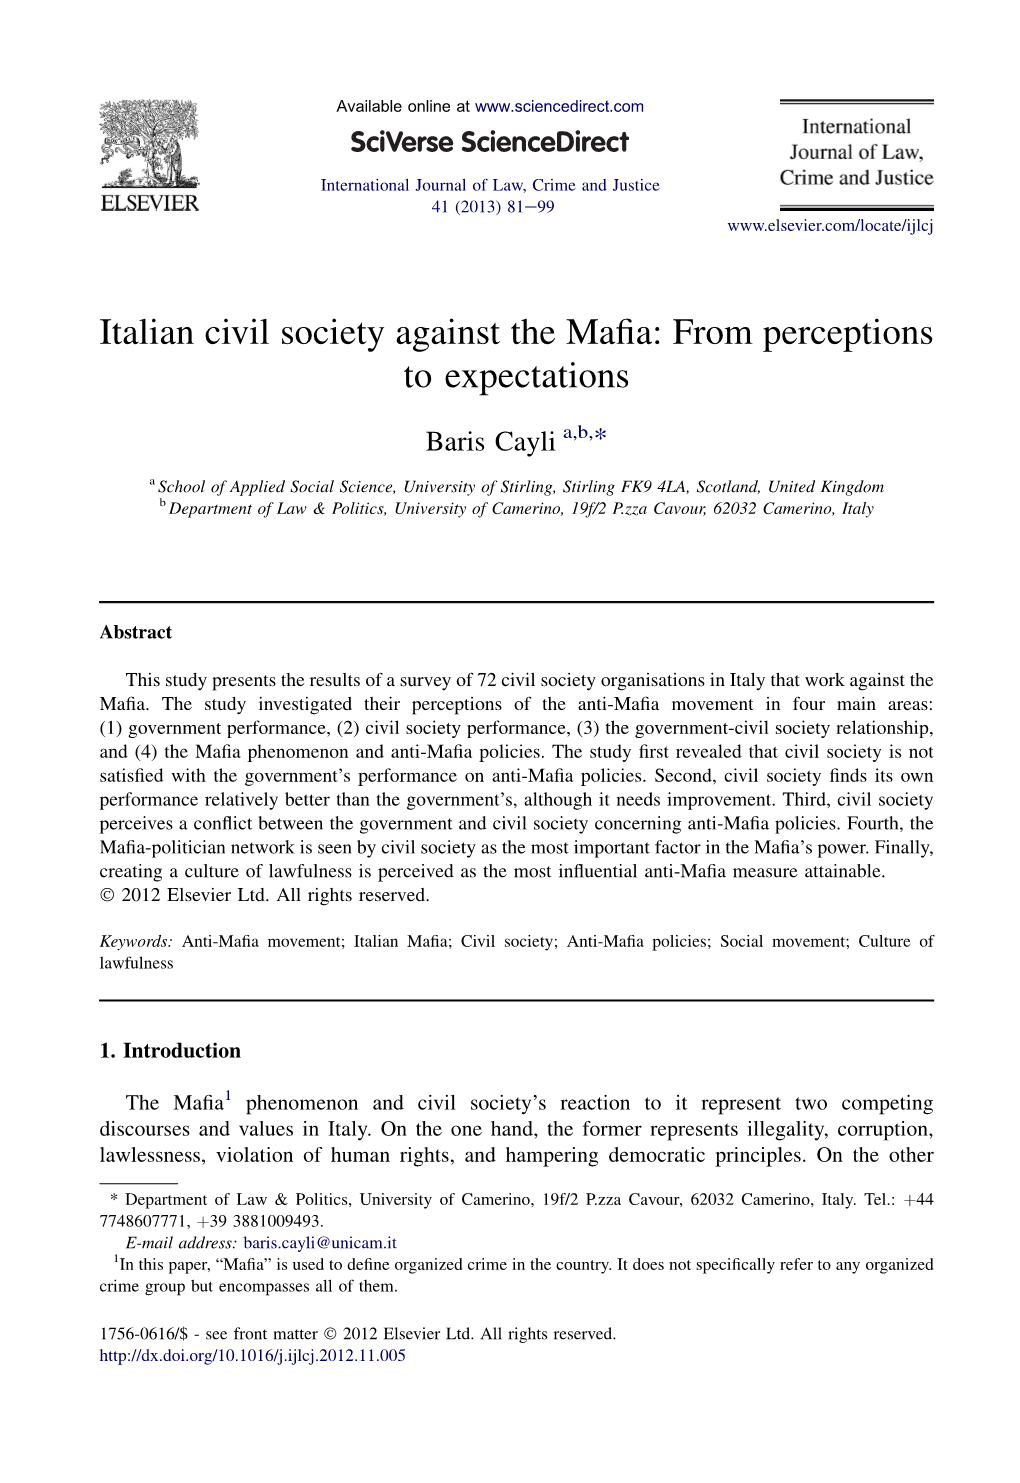 Italian Civil Society Against the Mafia